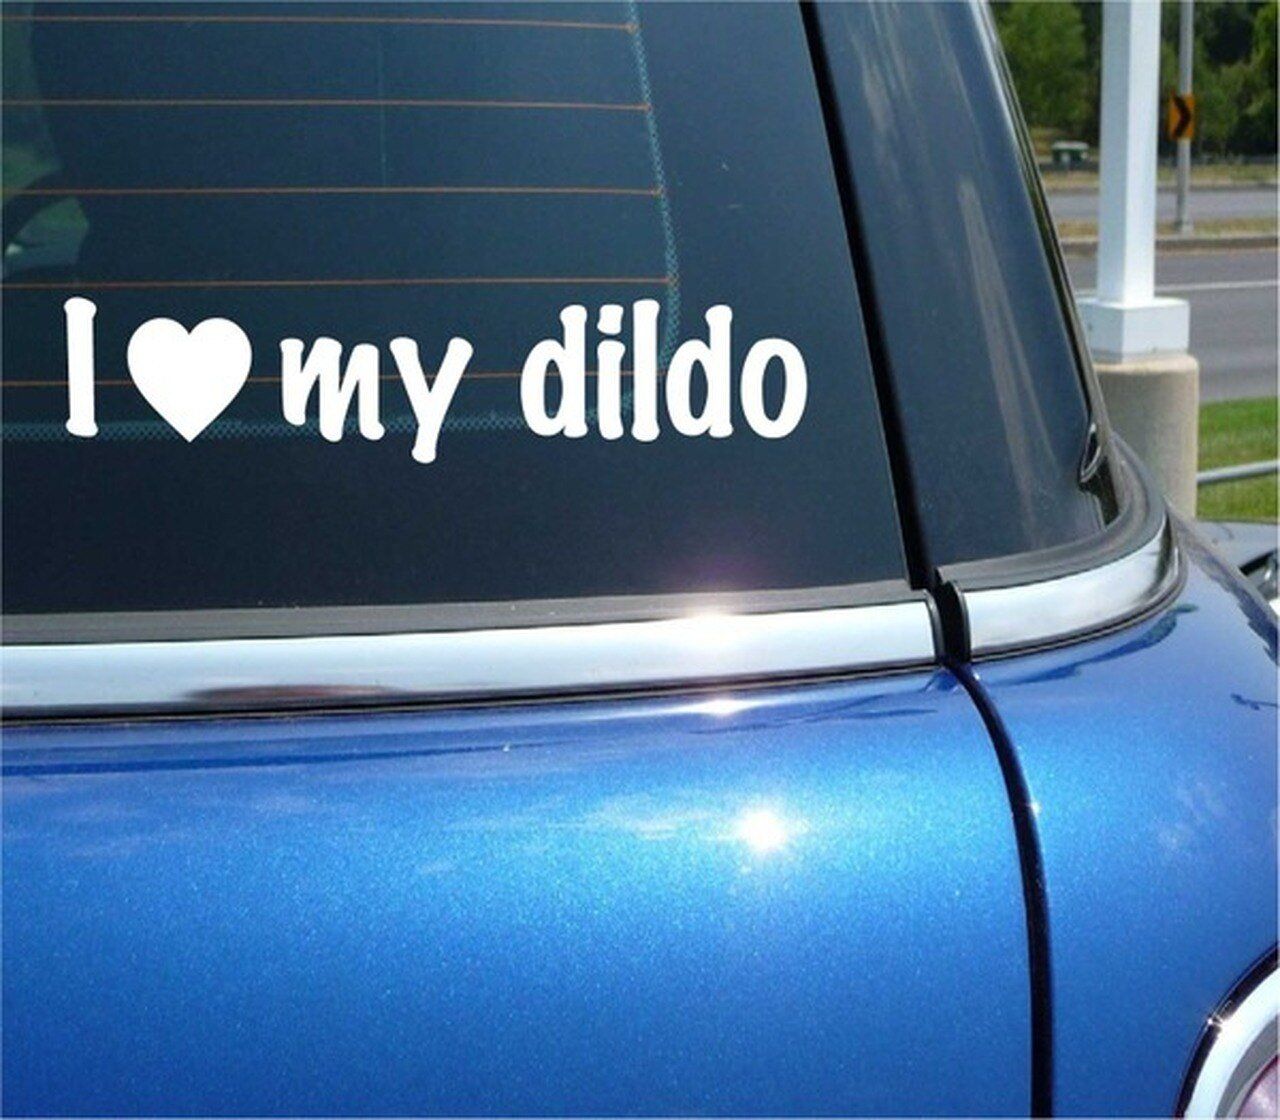 Funny dildo vehicle . Sex archive